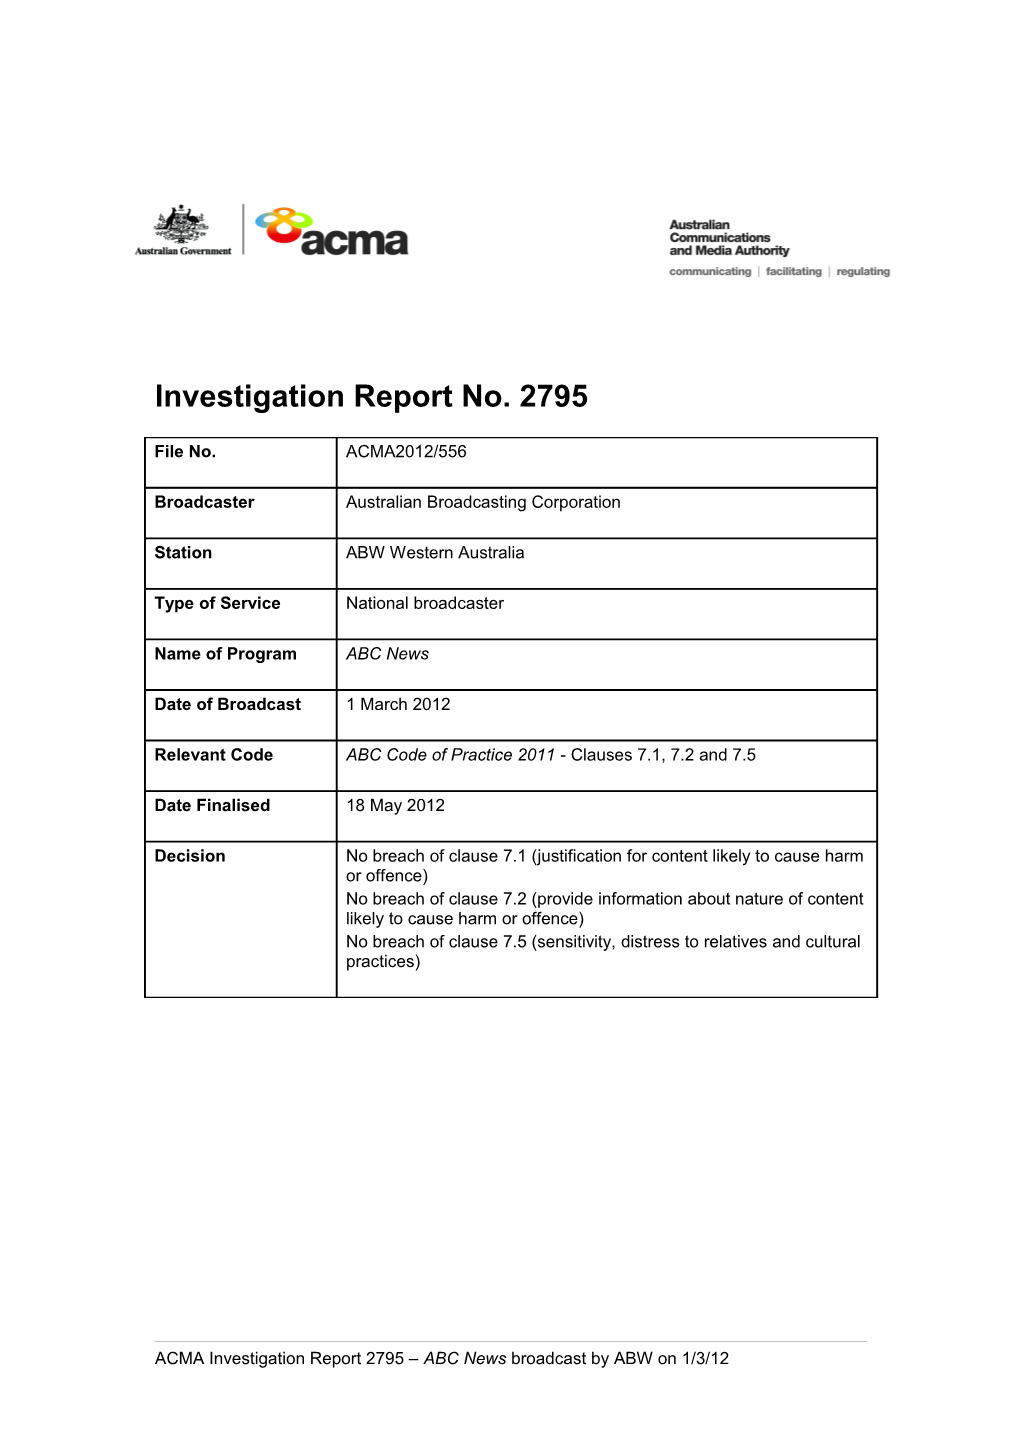 ABW (ABC WA) - ACMA Investigation Report 2795